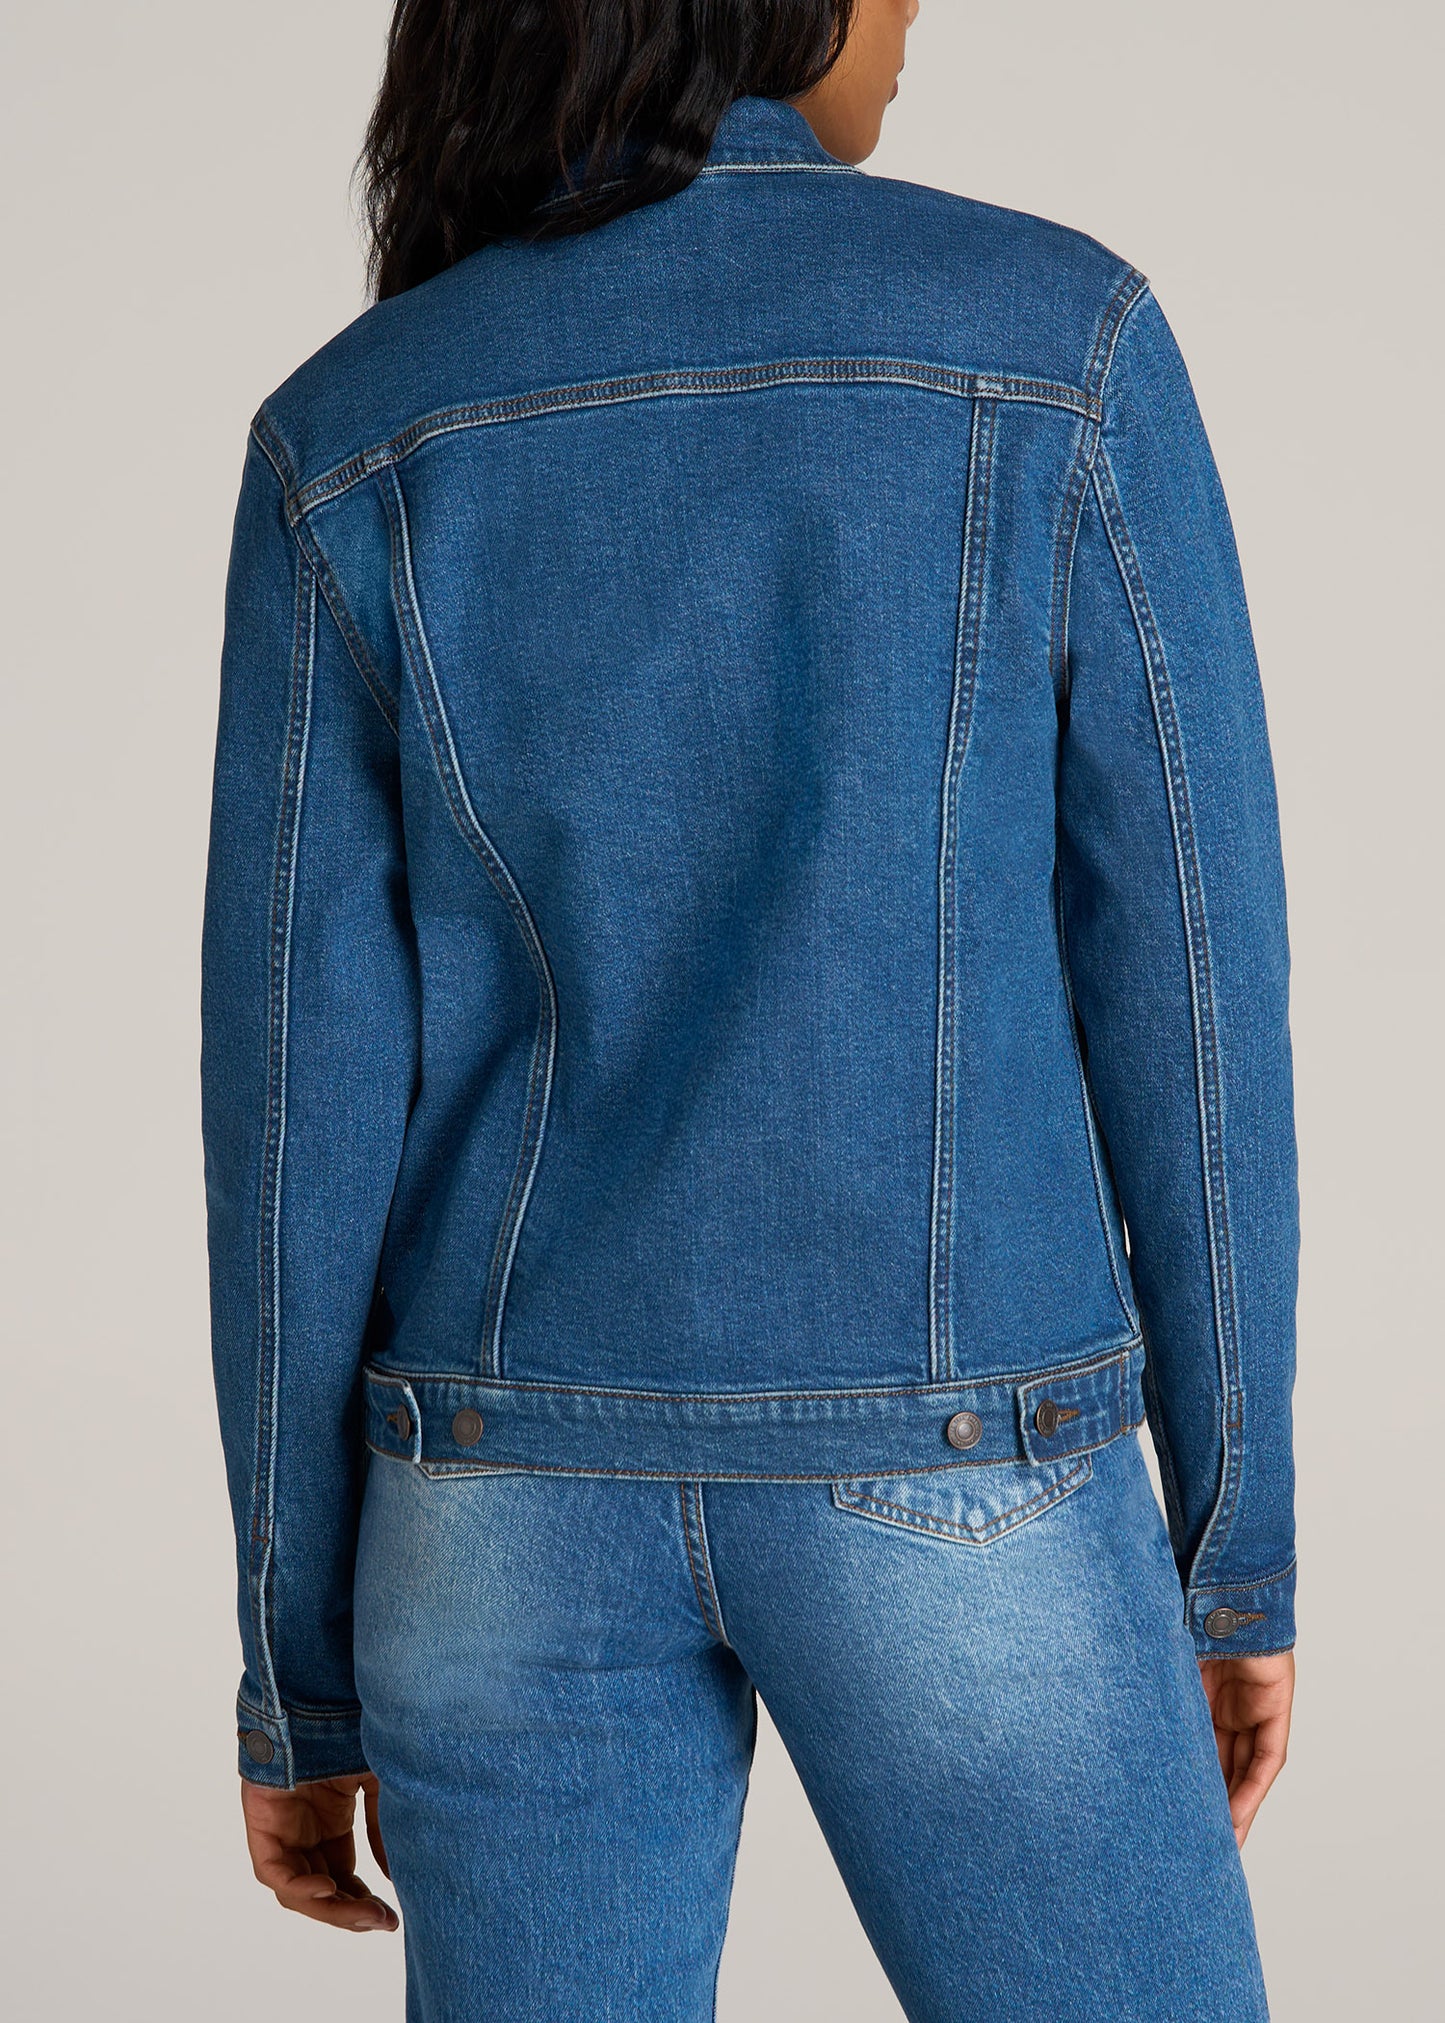 Tall Women's Denim Jacket in Blue 90's Wash